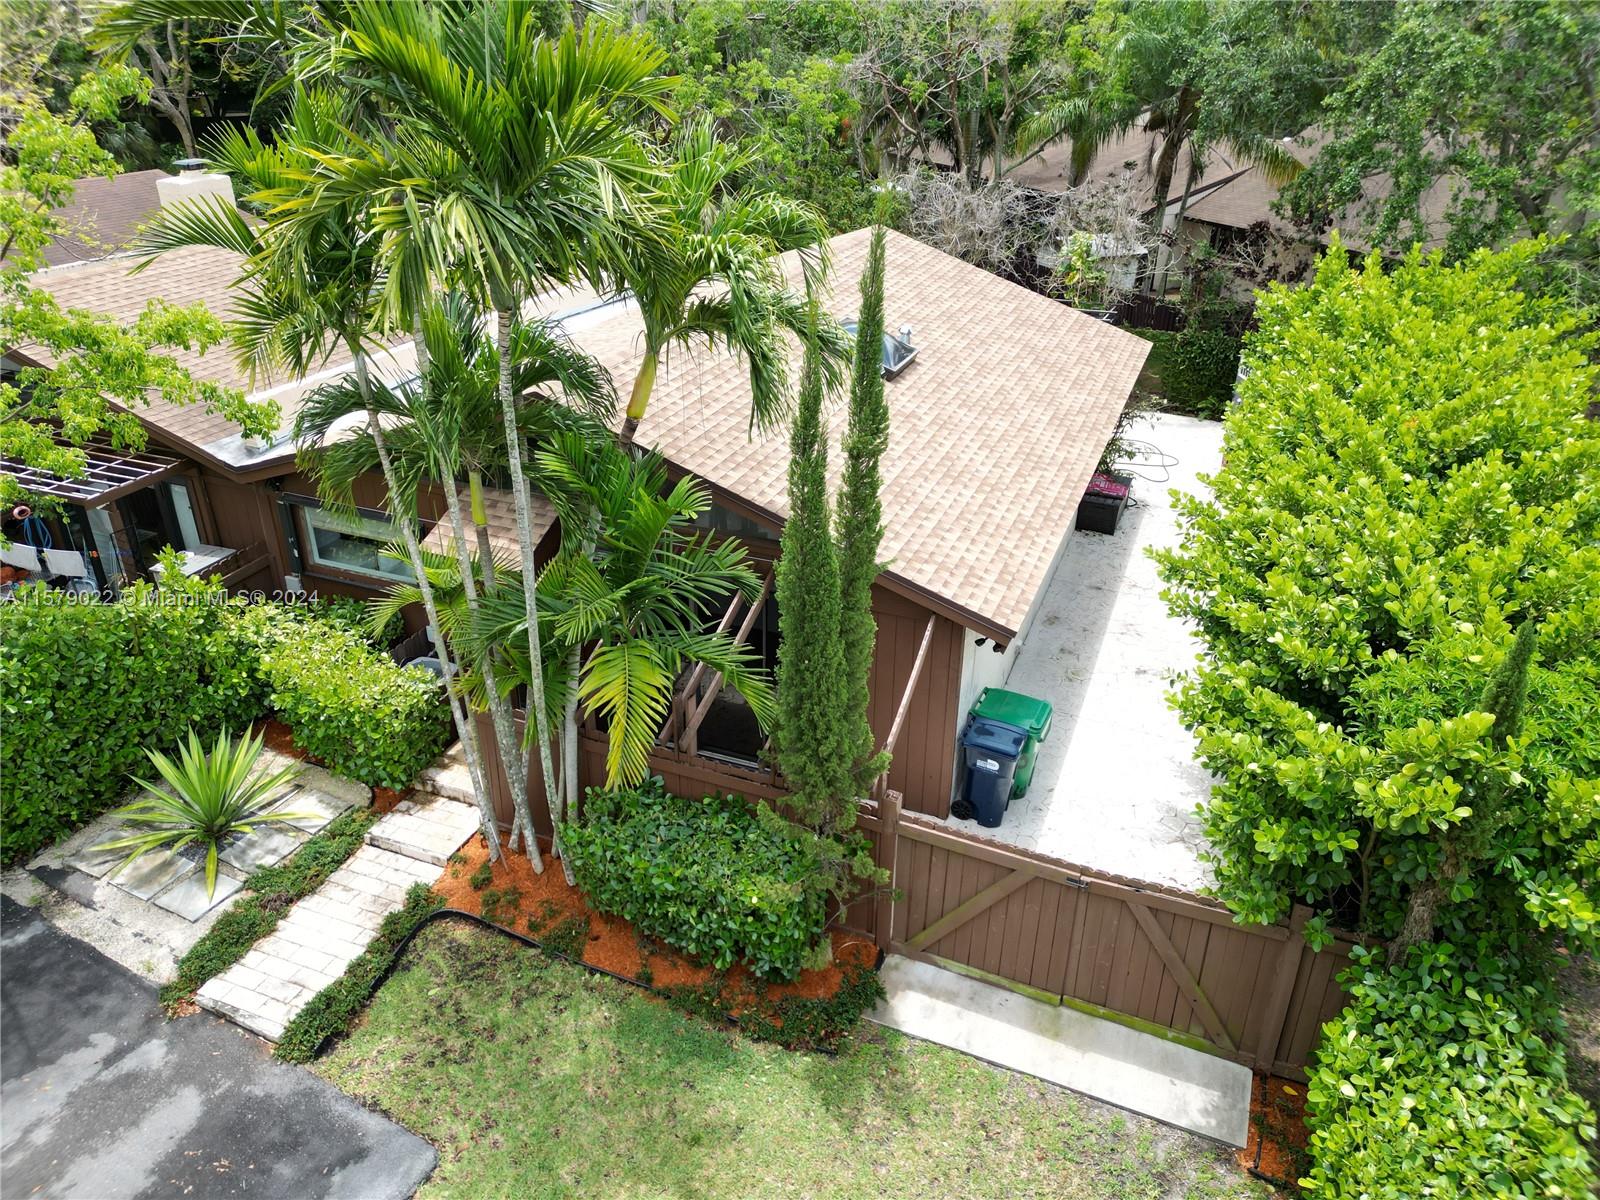 Property for Sale at 11340 Sw 114th Lane Cir Cir, Miami, Broward County, Florida - Bedrooms: 2 
Bathrooms: 1  - $512,000